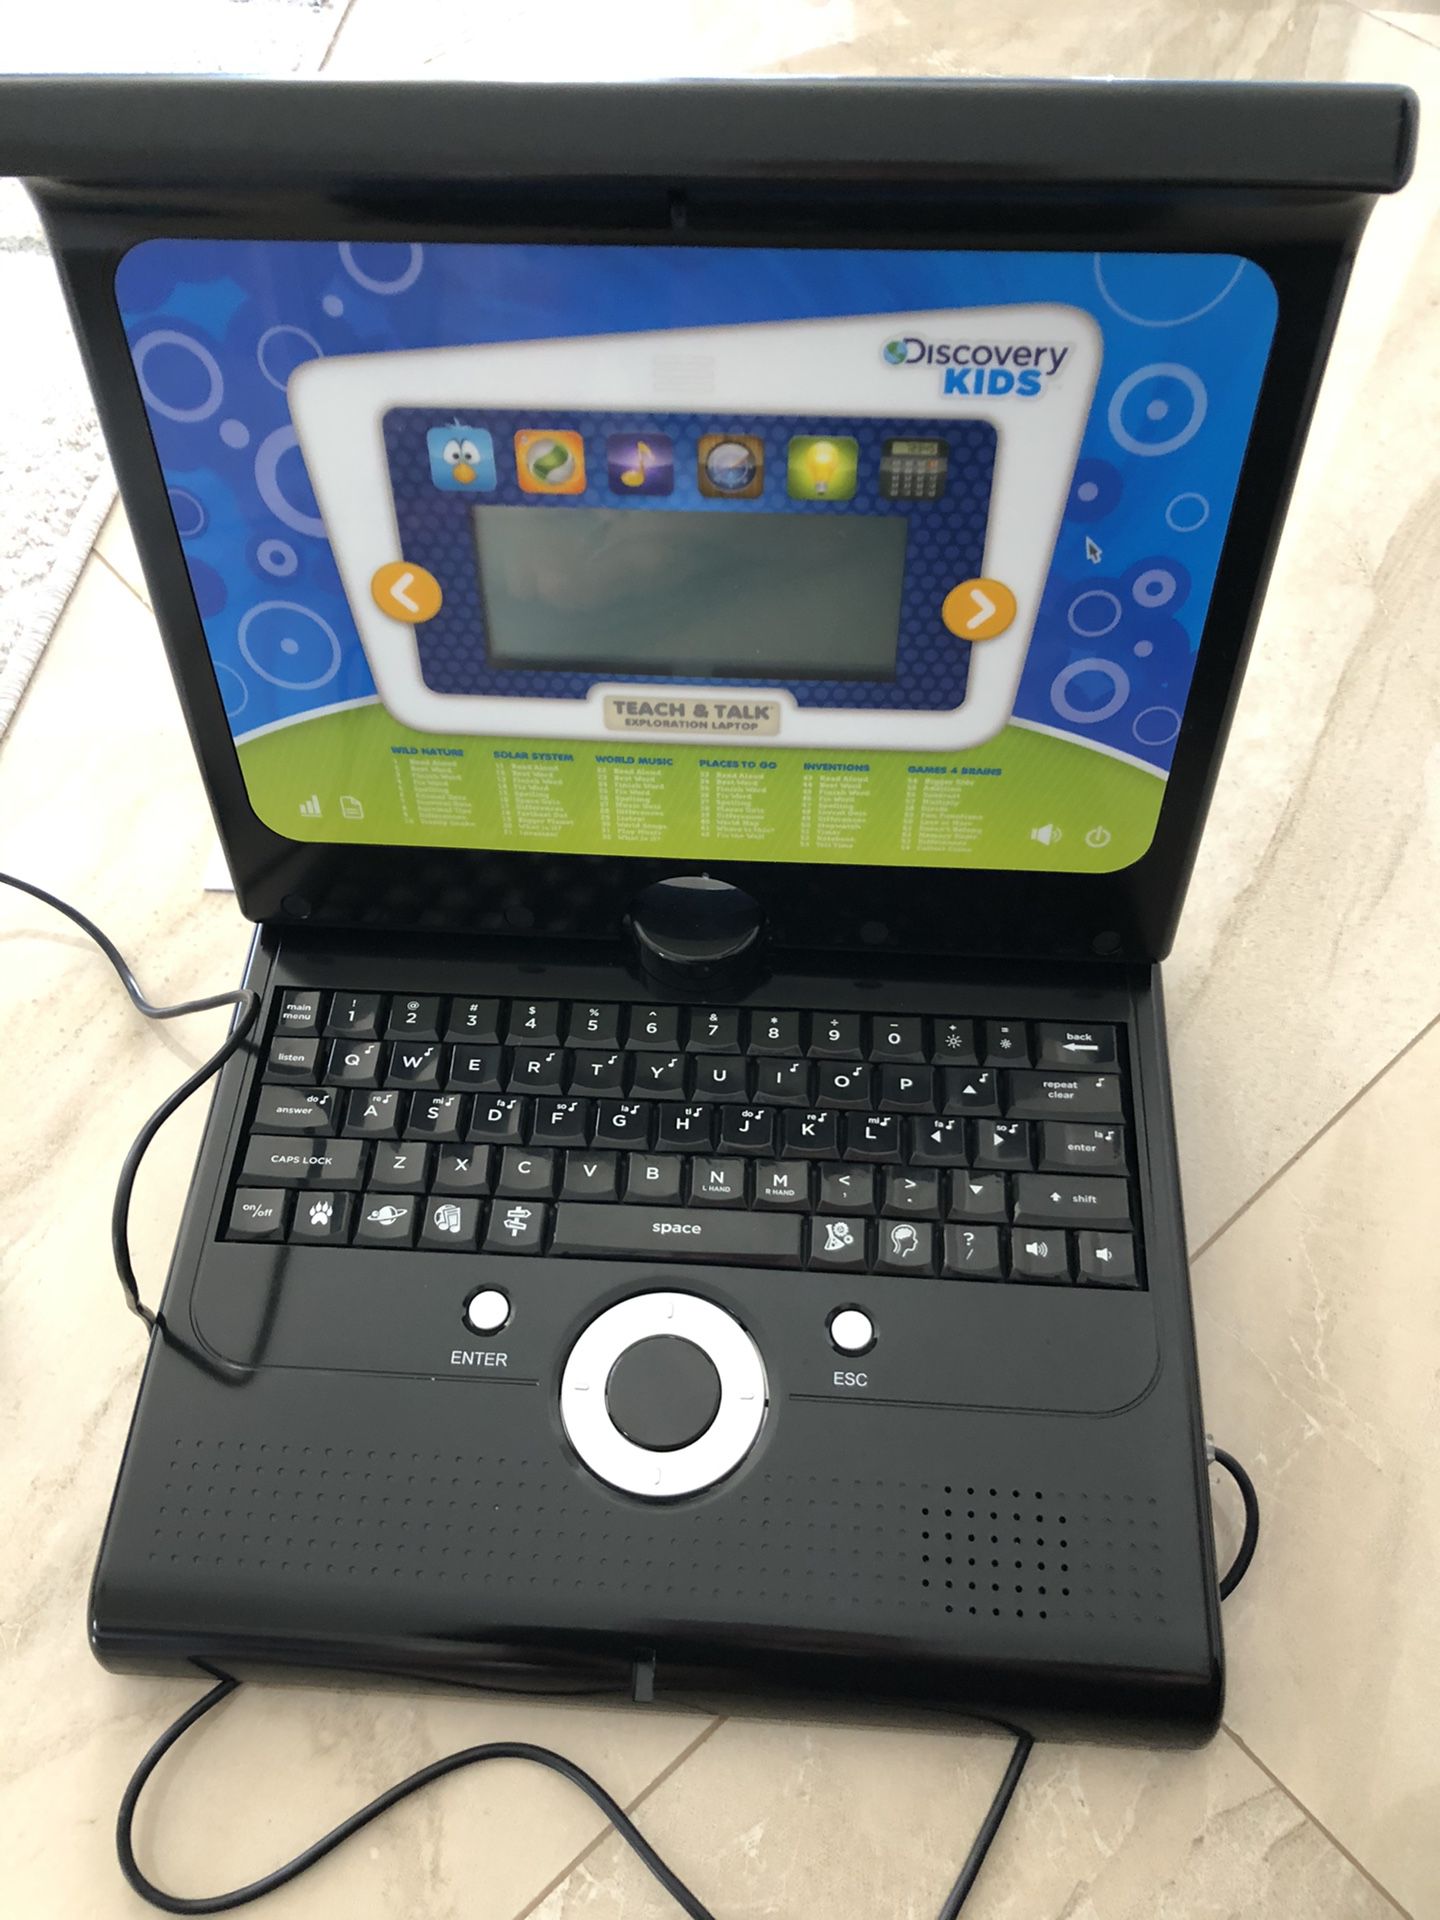 Laptop for kids educational